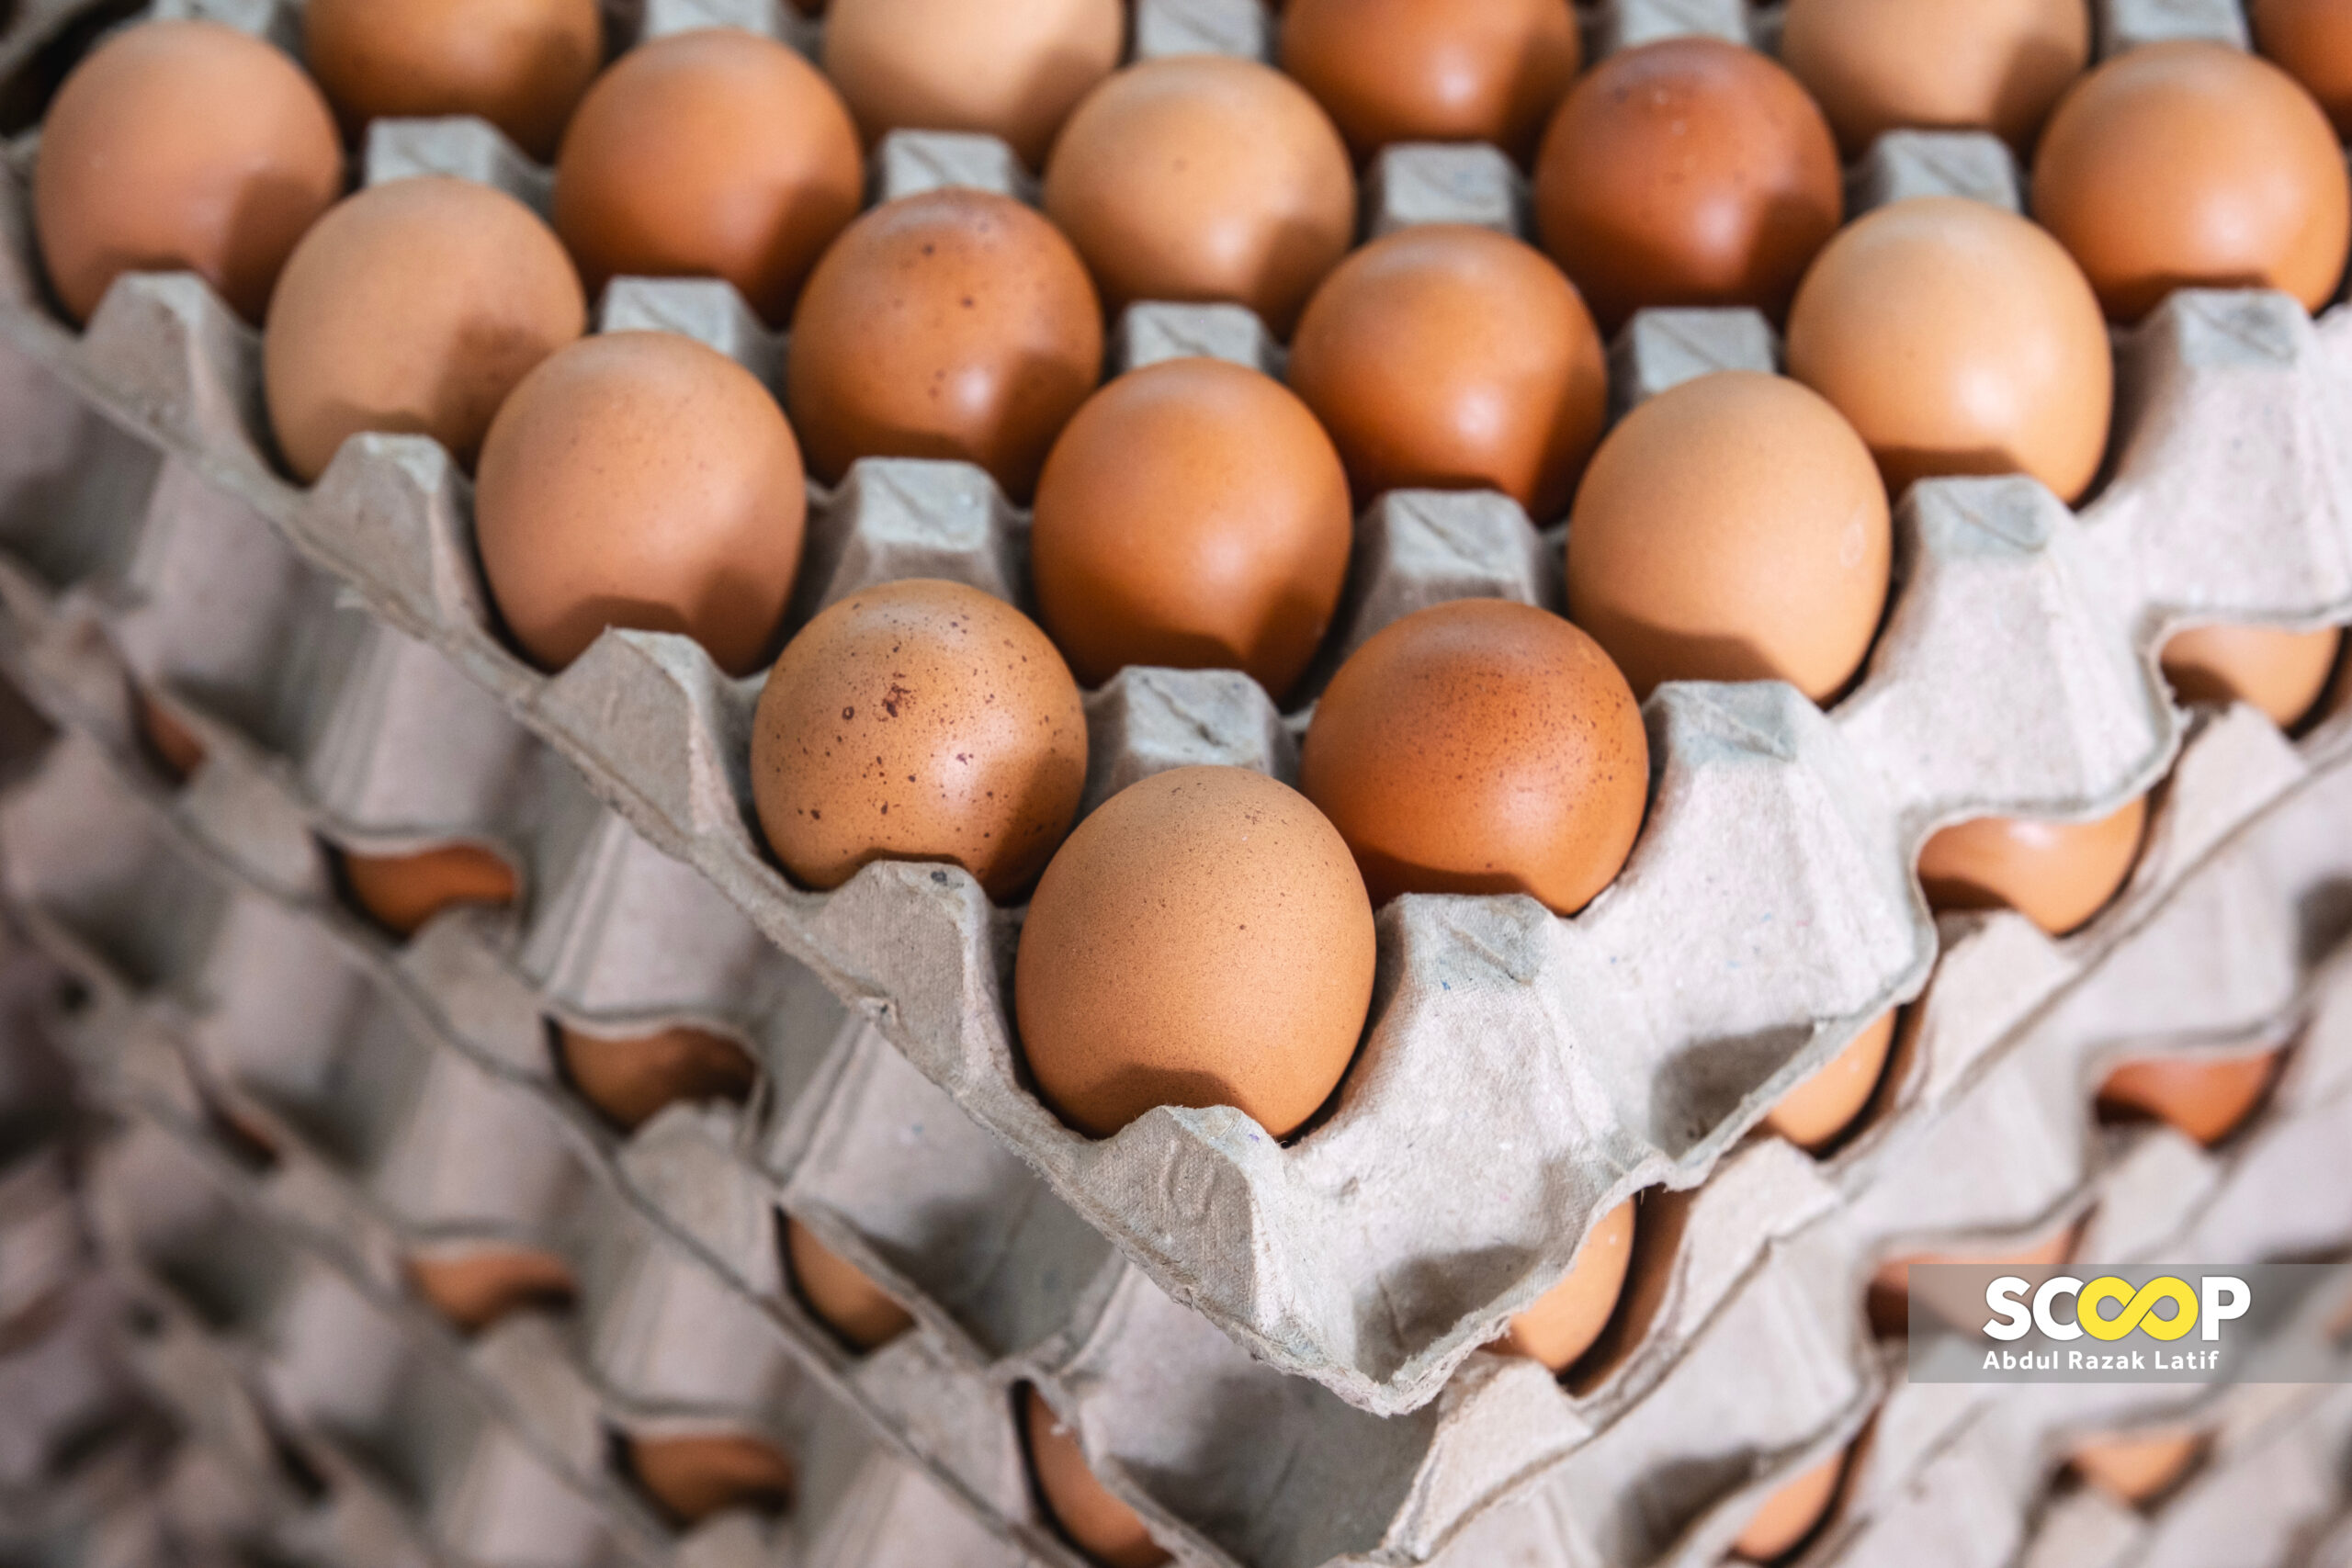 Meskipun harga telur turun, harga makanan di restoran mamak kekal: Presma